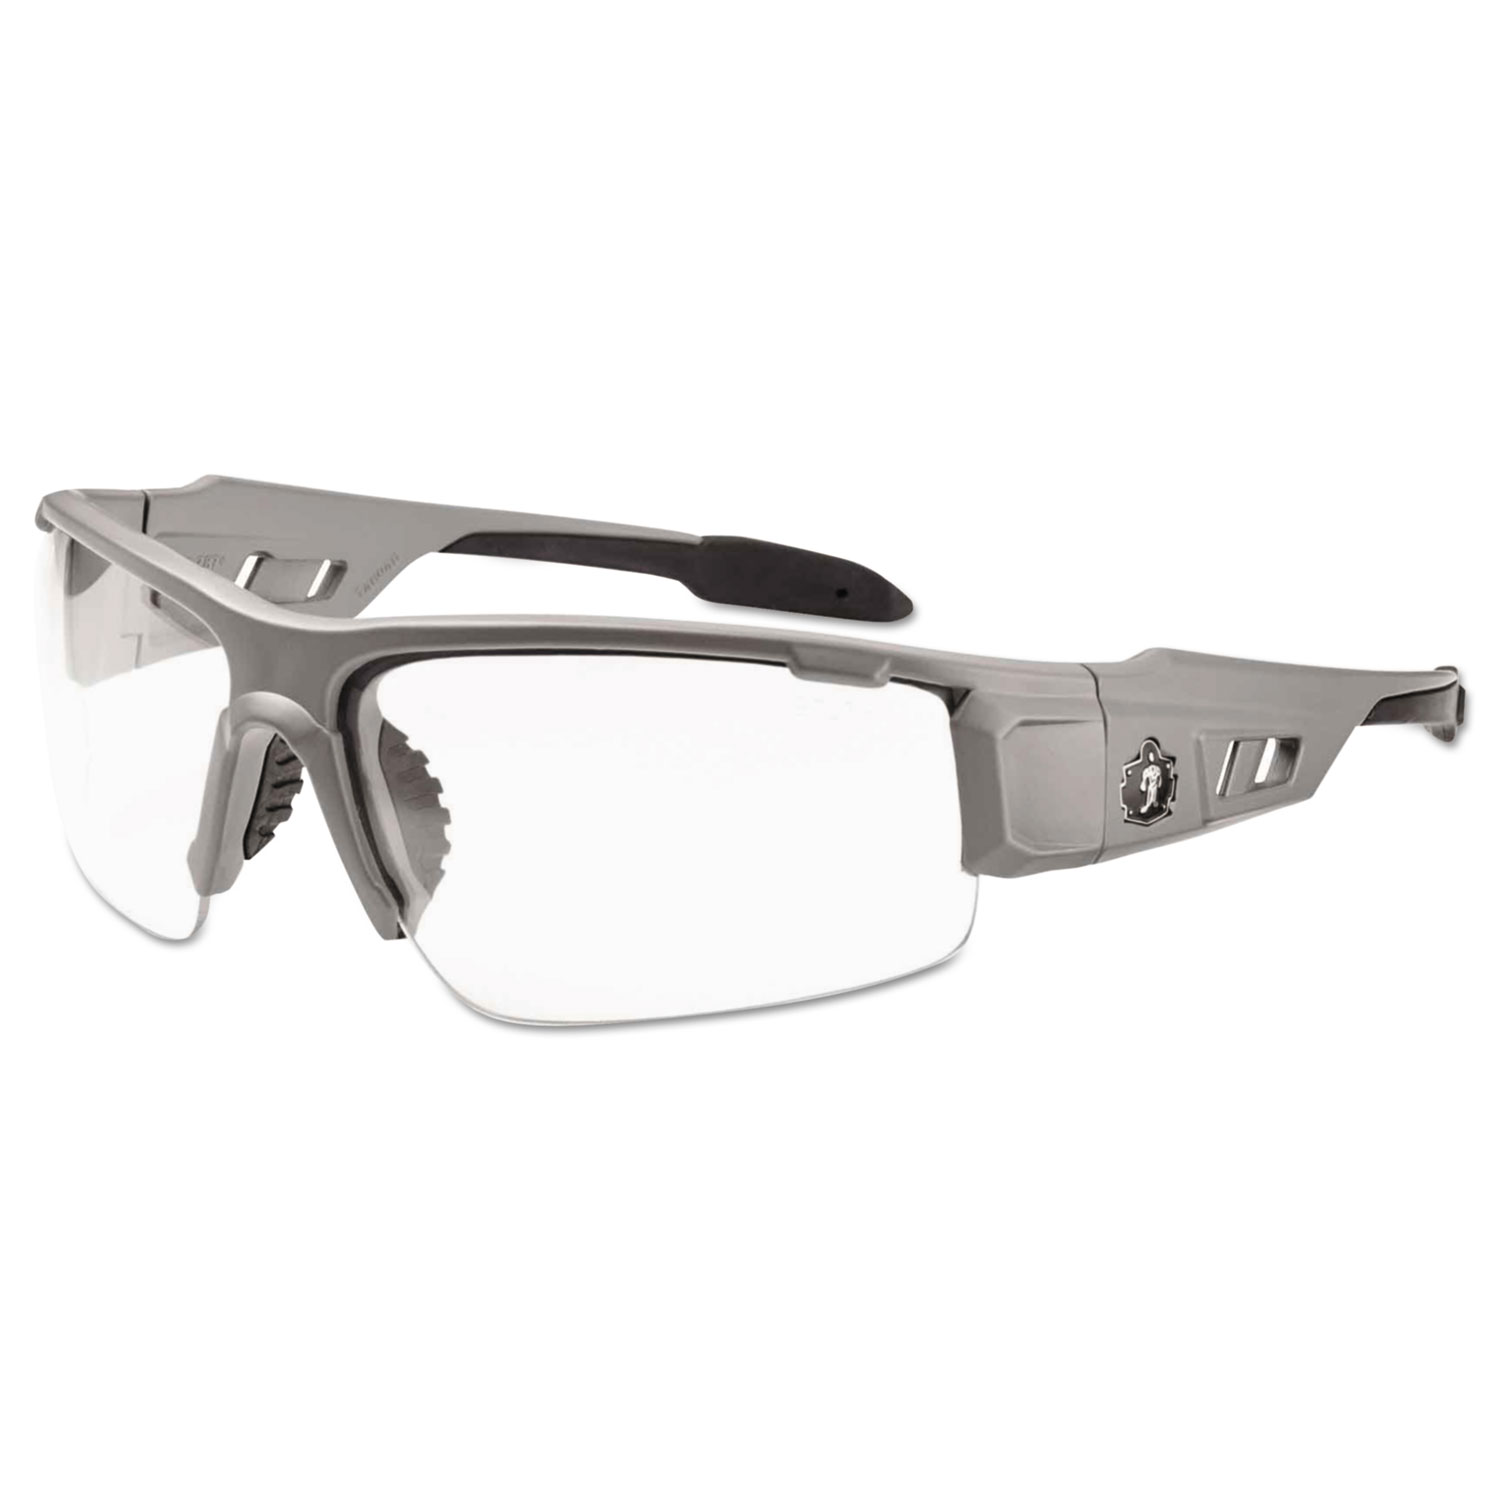 Skullerz Dagr Safety Glasses, Matte Gray Frame/Clear Lens, Nylon/Polycarb  Zerbee